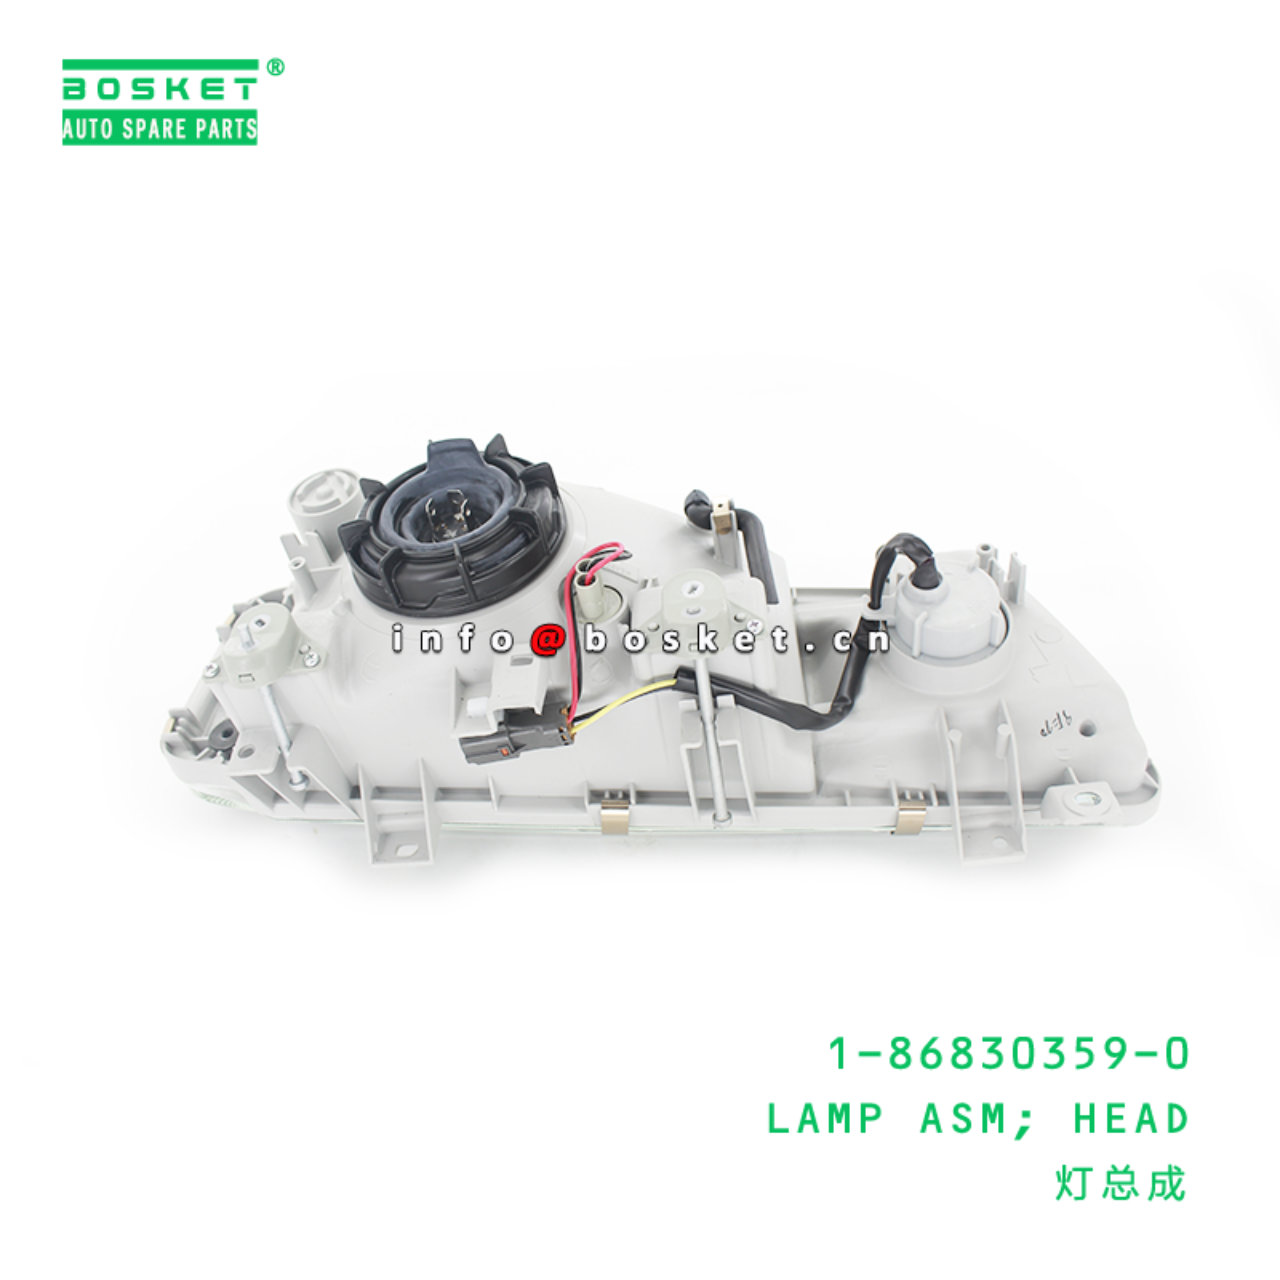 1-86830359-0 Head Lamp Assembly Suitable for ISUZU ESR FRR FSR 1868303590